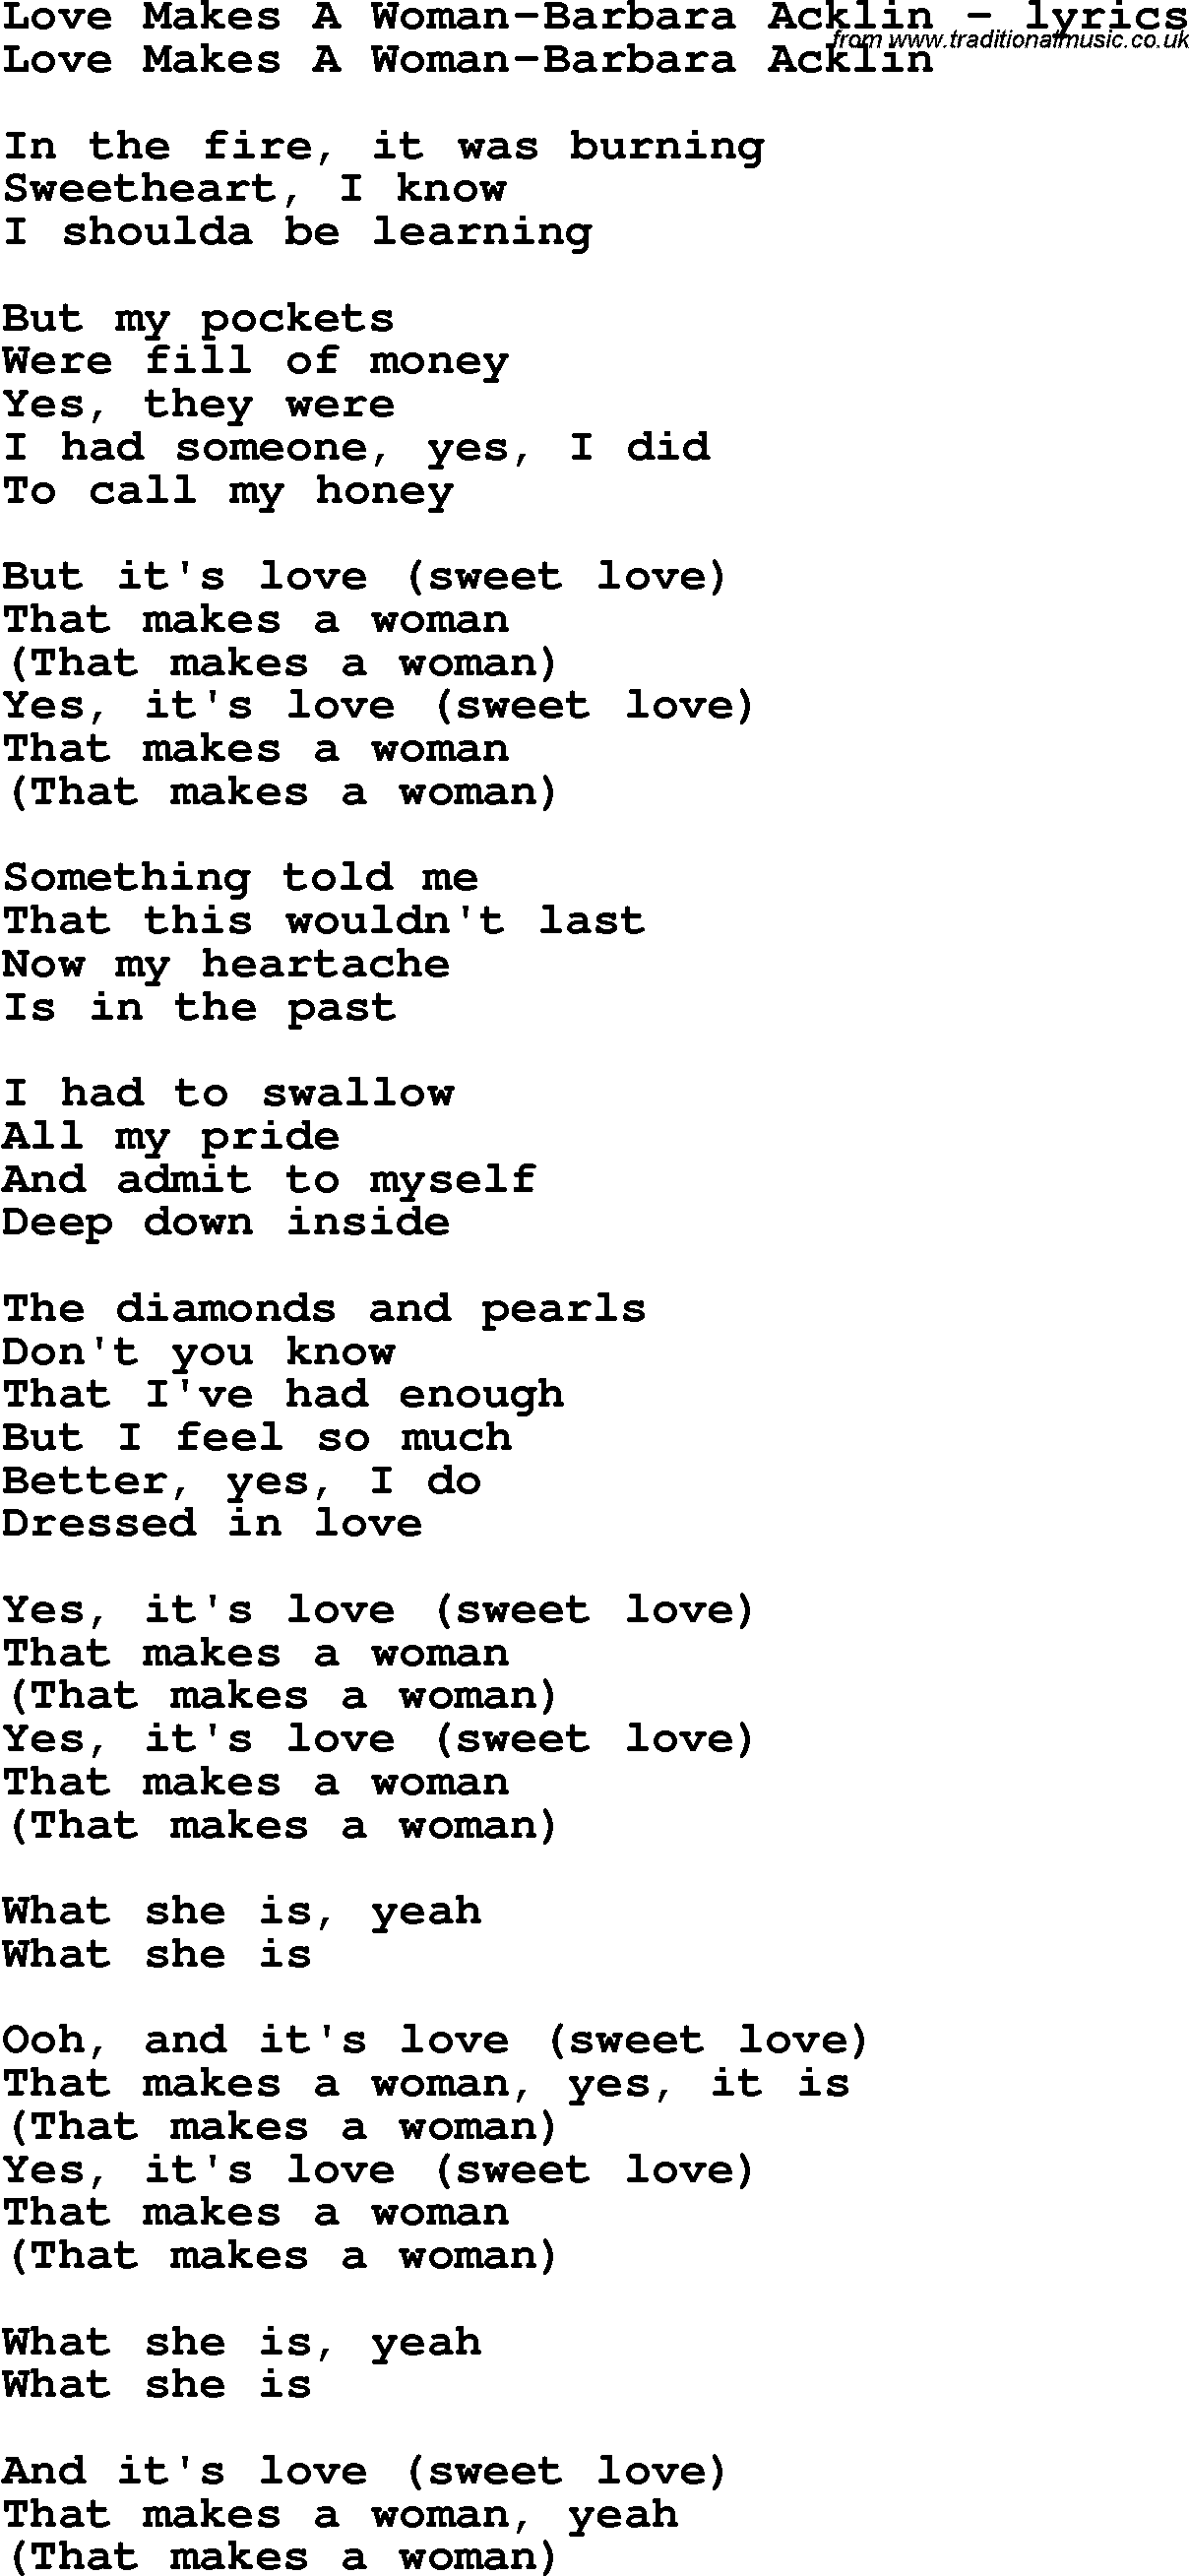 Love Song Lyrics for: Love Makes A Woman-Barbara Acklin